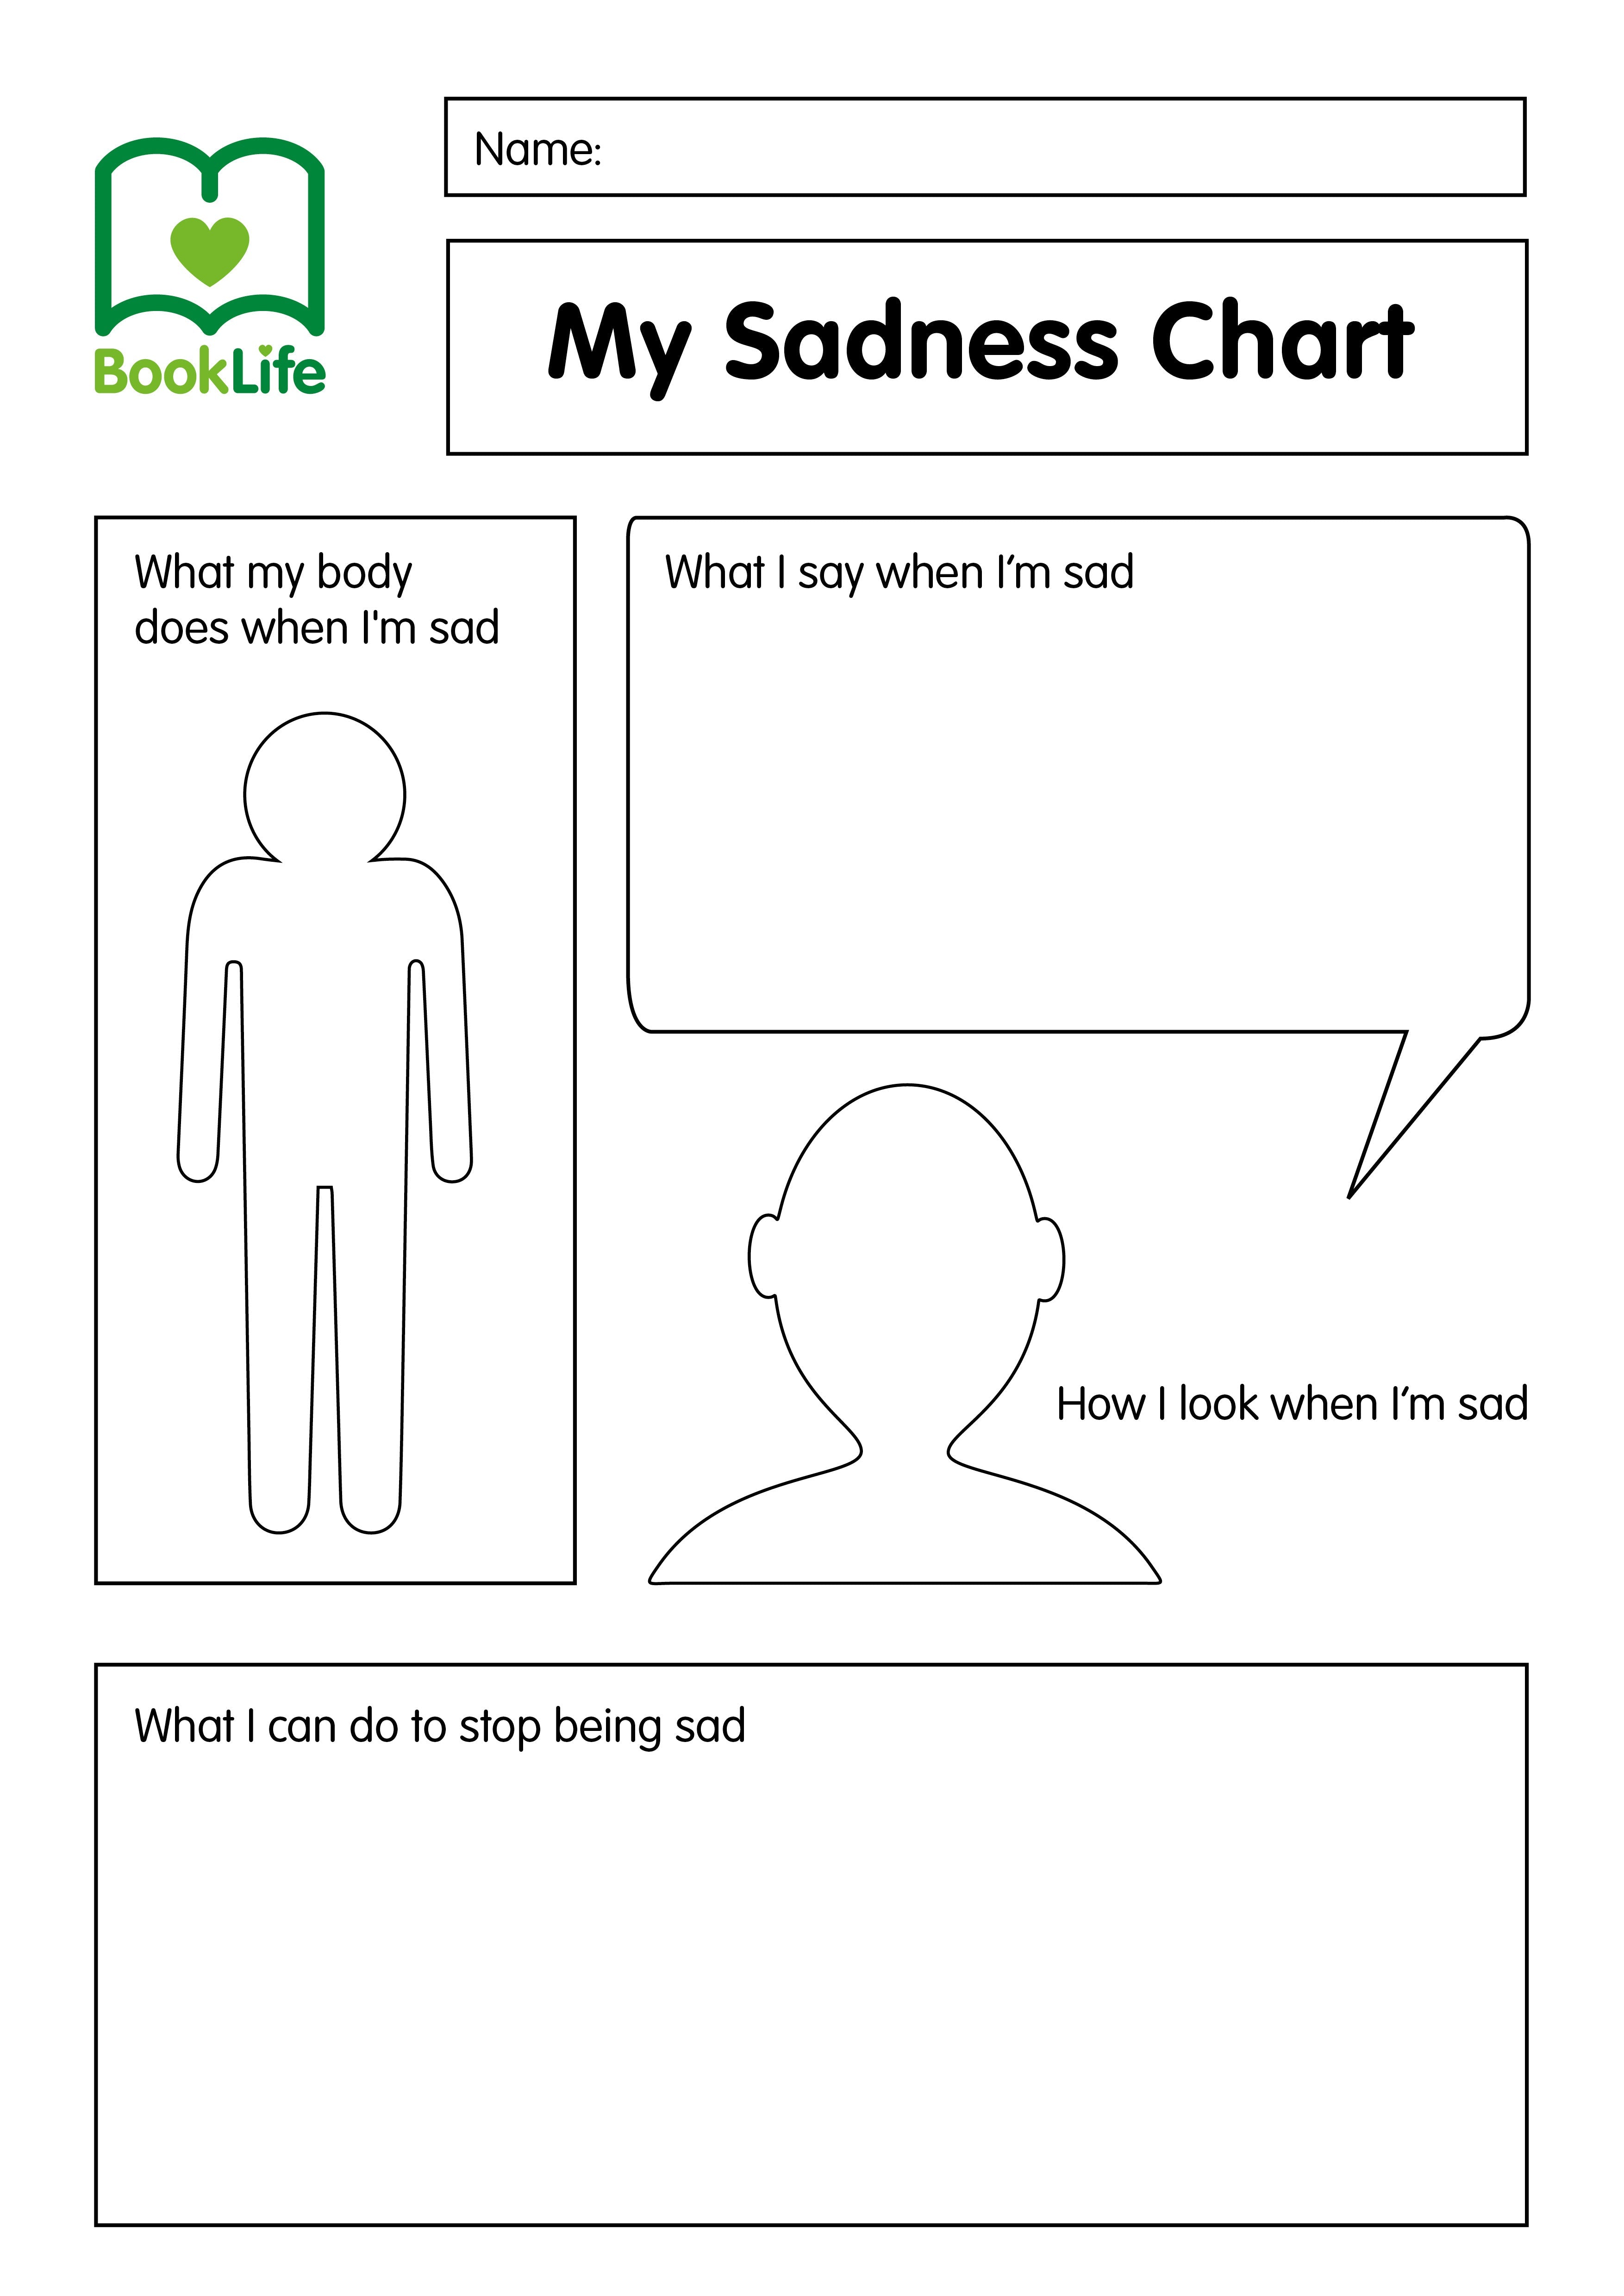 Free My Sadness Chart by BookLife